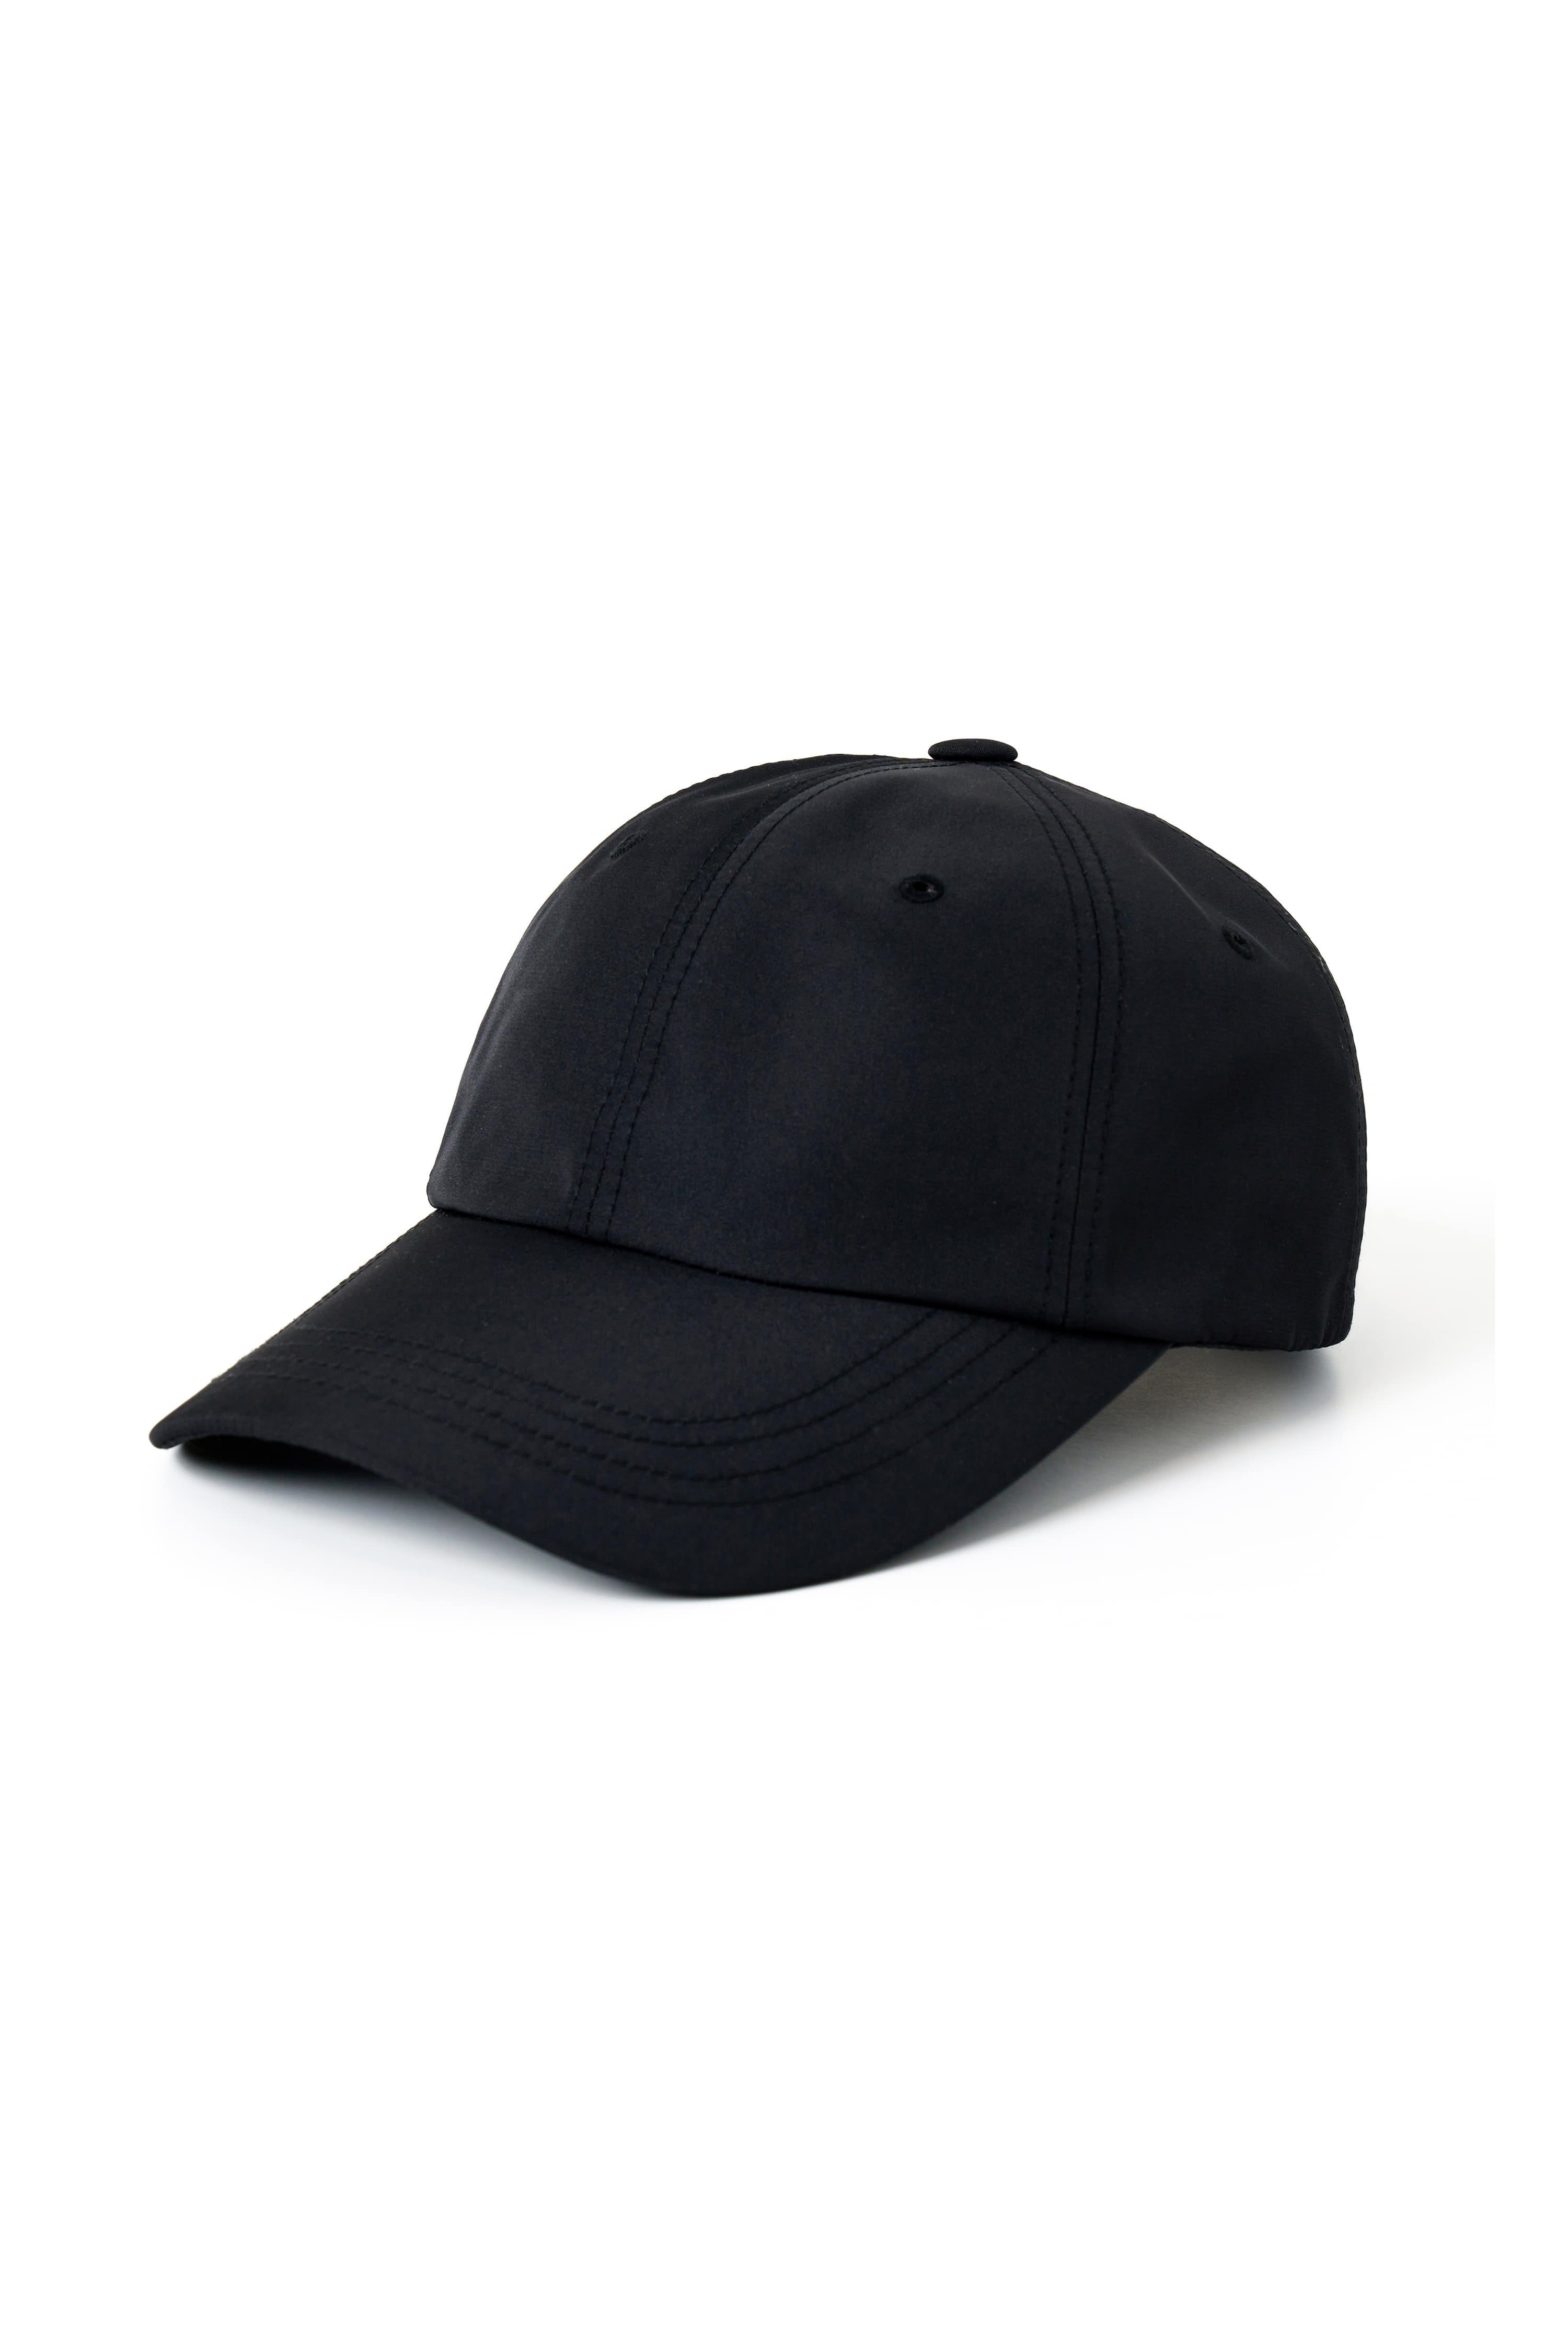 BLACK NYLON BALL CAP